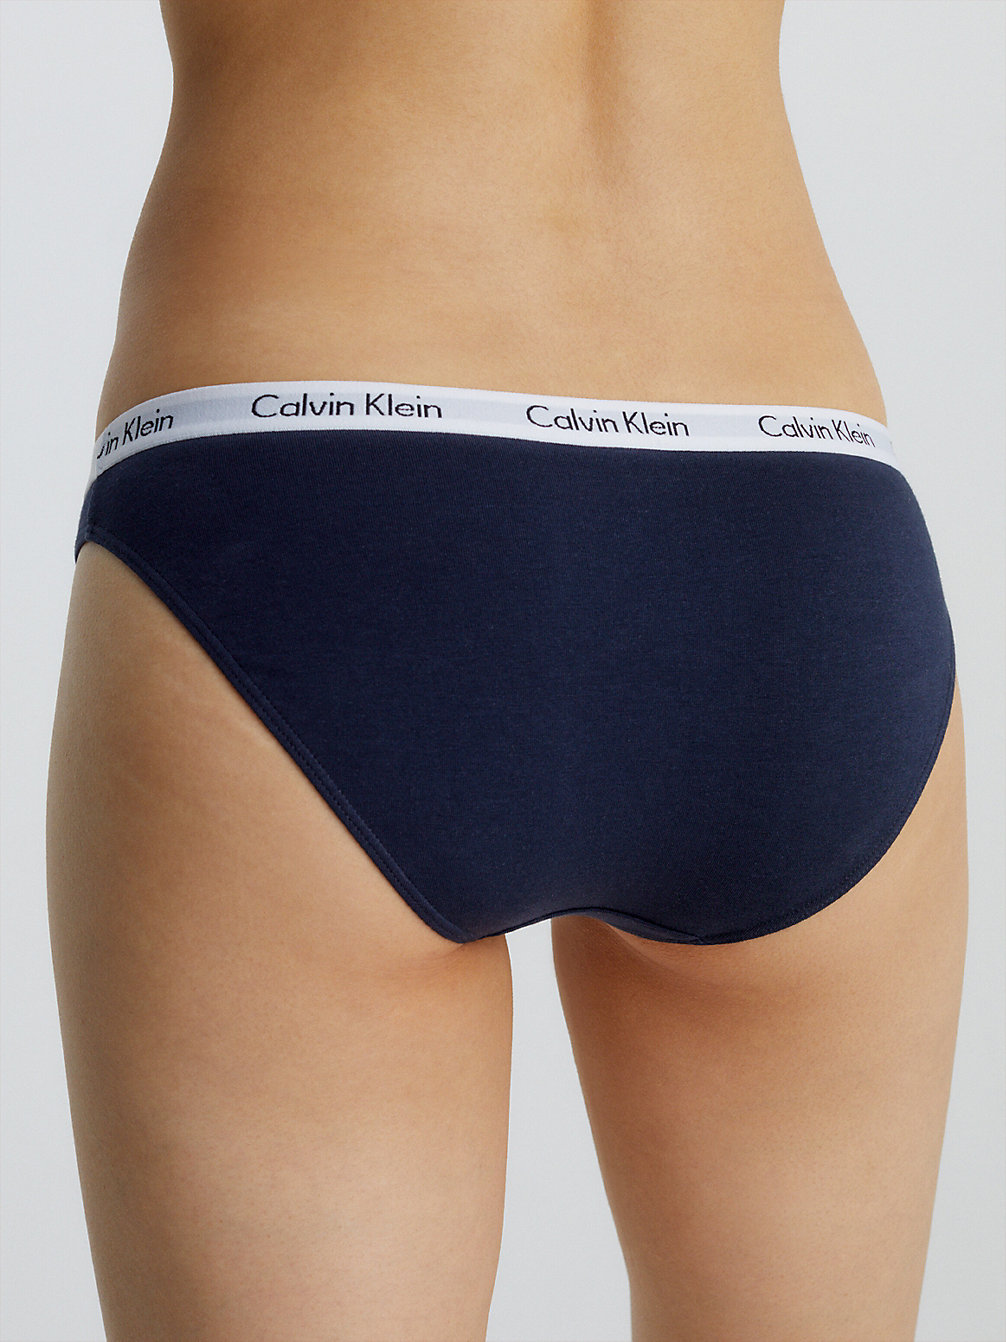 SHORELINE Slip – Carousel undefined Damen Calvin Klein